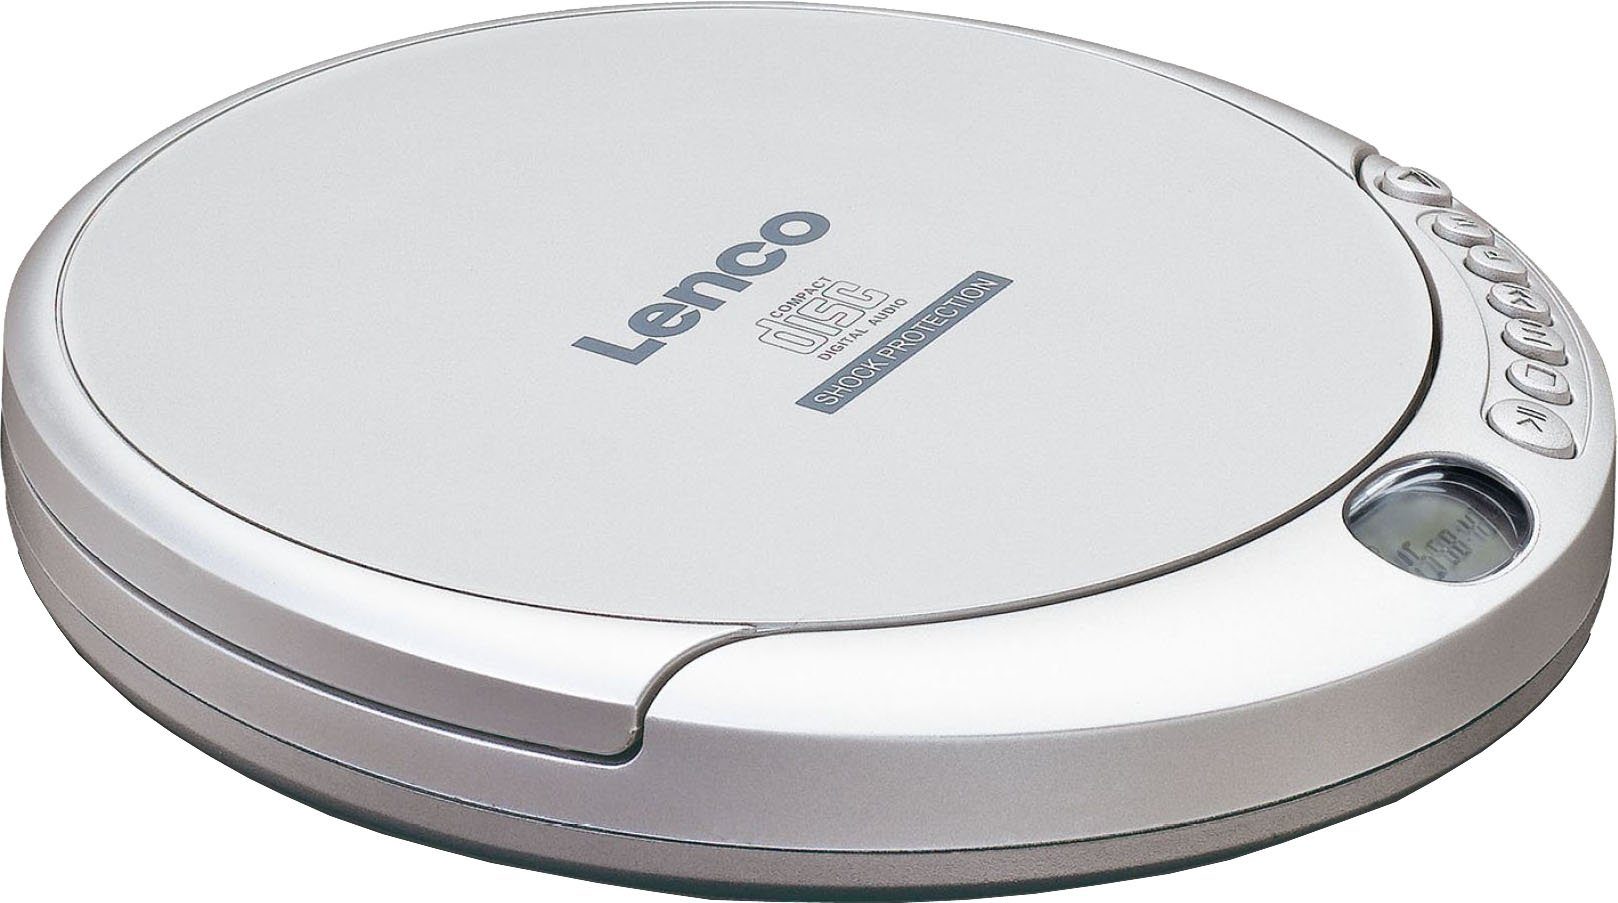 Lenco CD-201Sl CD-Player (Anti-Schock-Funktion), Praktischer tragbarer CD- Player / Discman